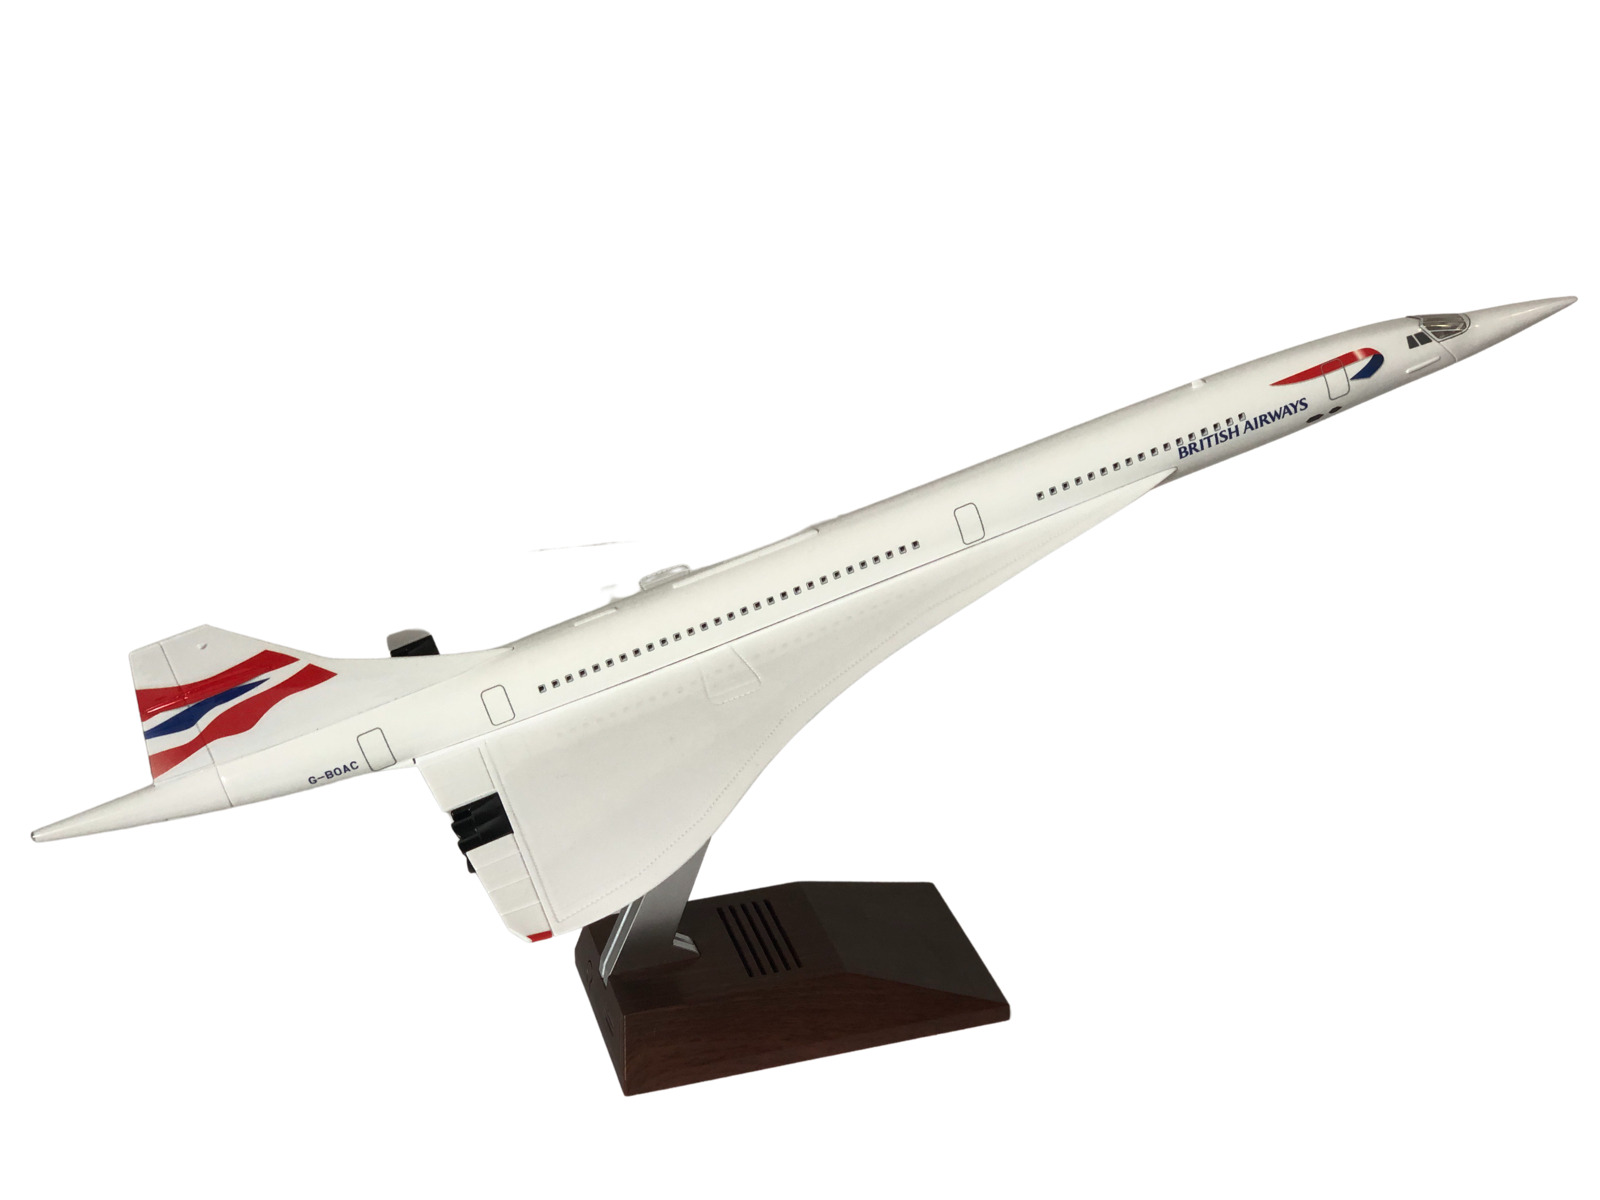 British Concorde Large Display Plane Model  Airplane Apx 50cm  Resin 1:120